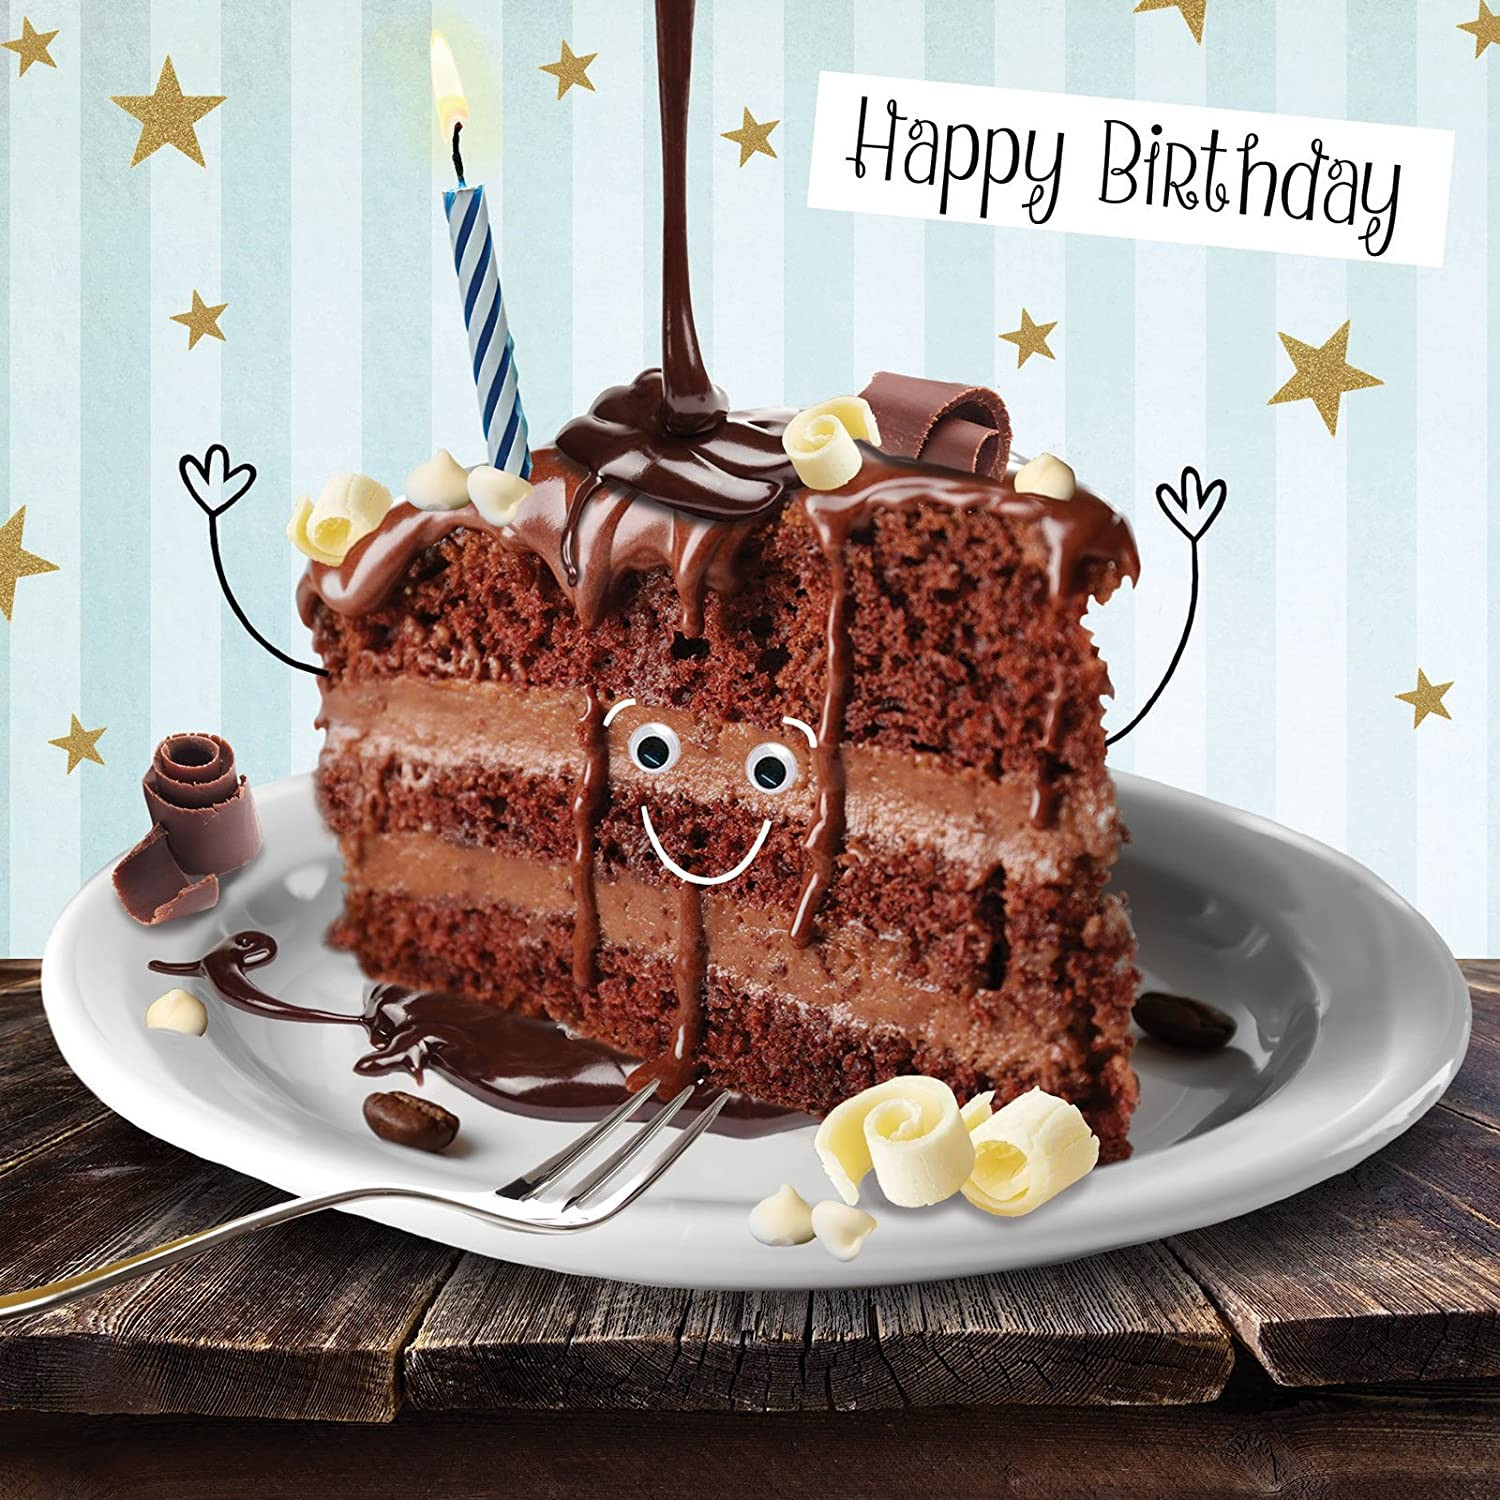 Happy Birthday Funny Cake
 Funny Chocolate Cake Birthday Card 3D Goggly Moving Eyes